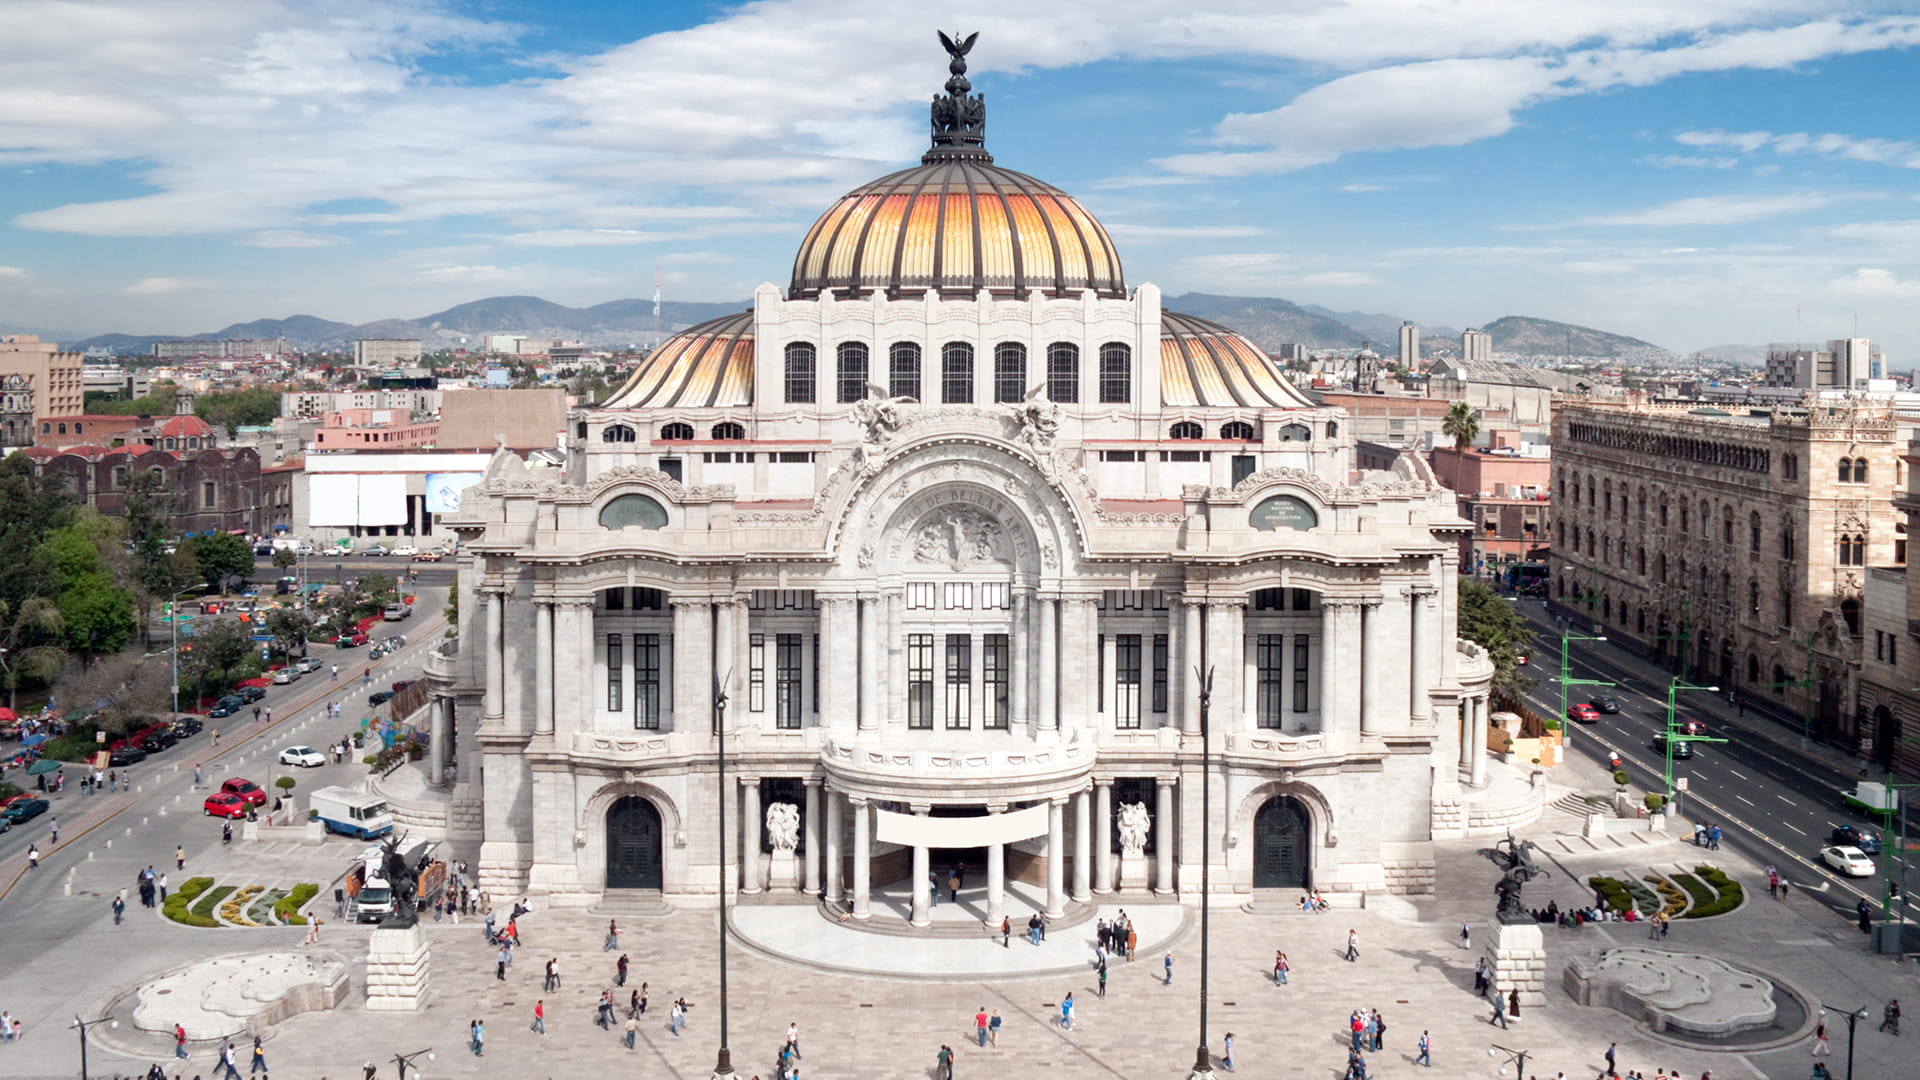 Building in Mexico City